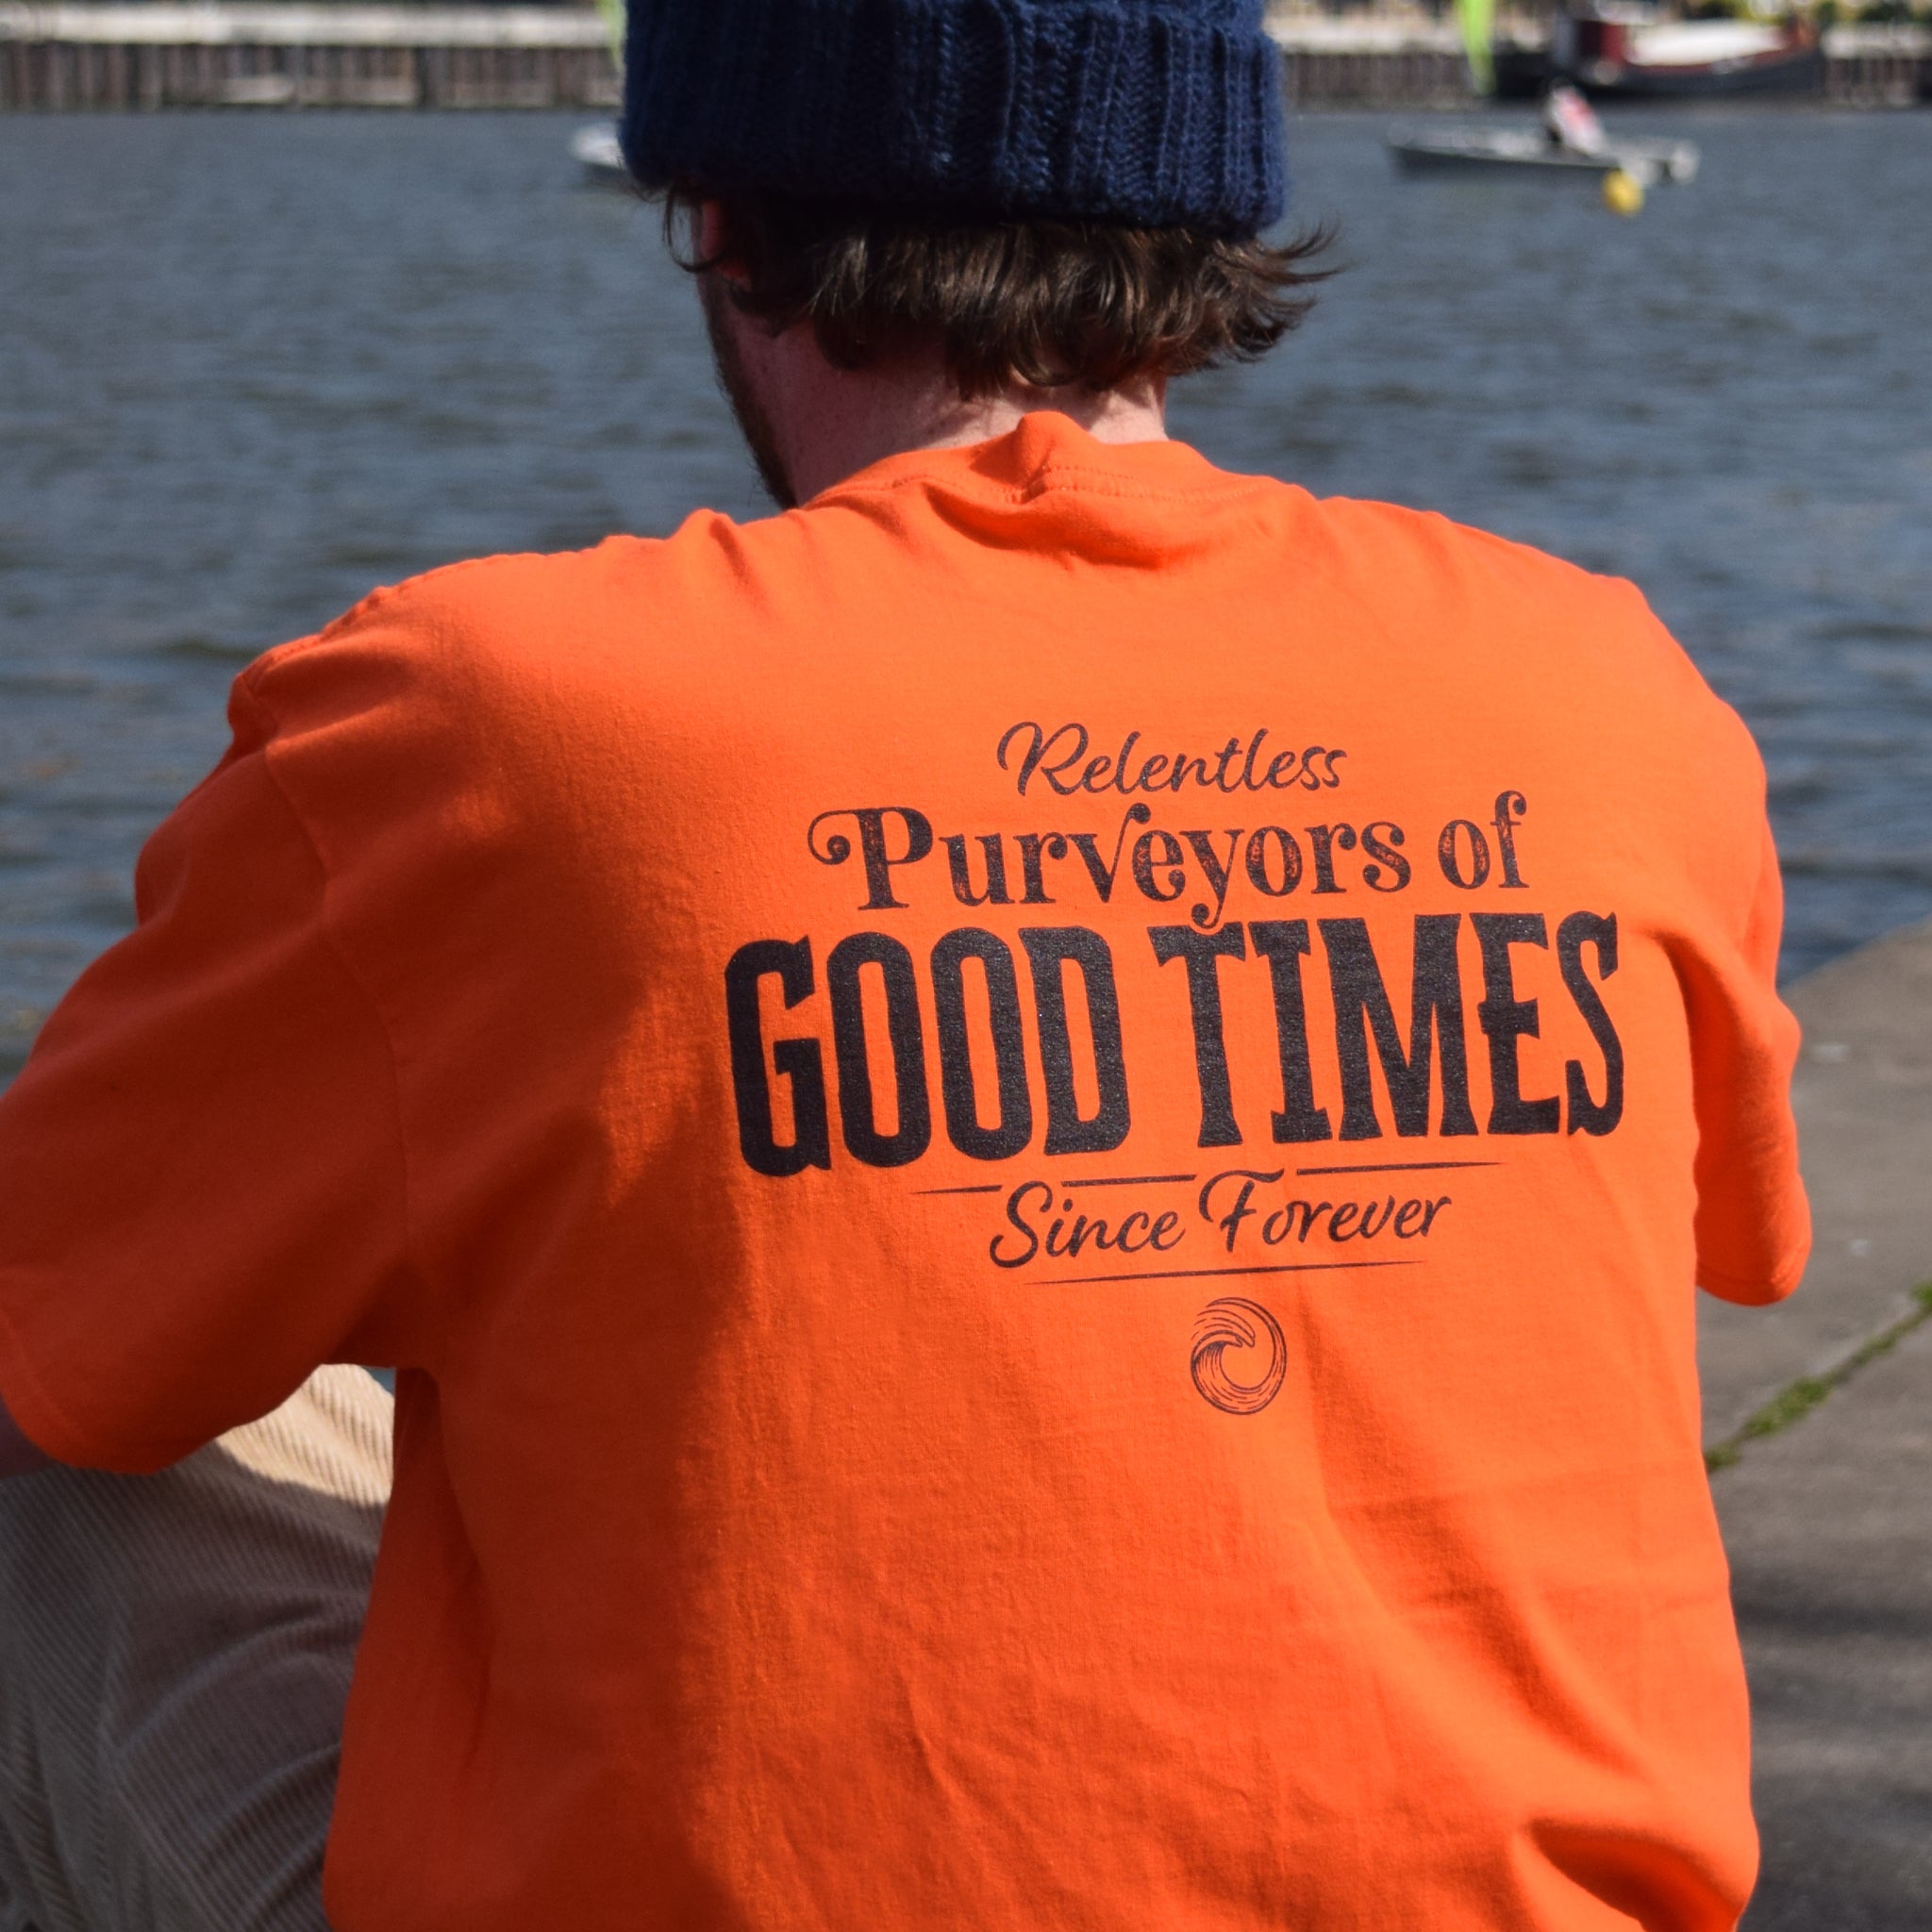 'Good Times' Mens T-Shirt